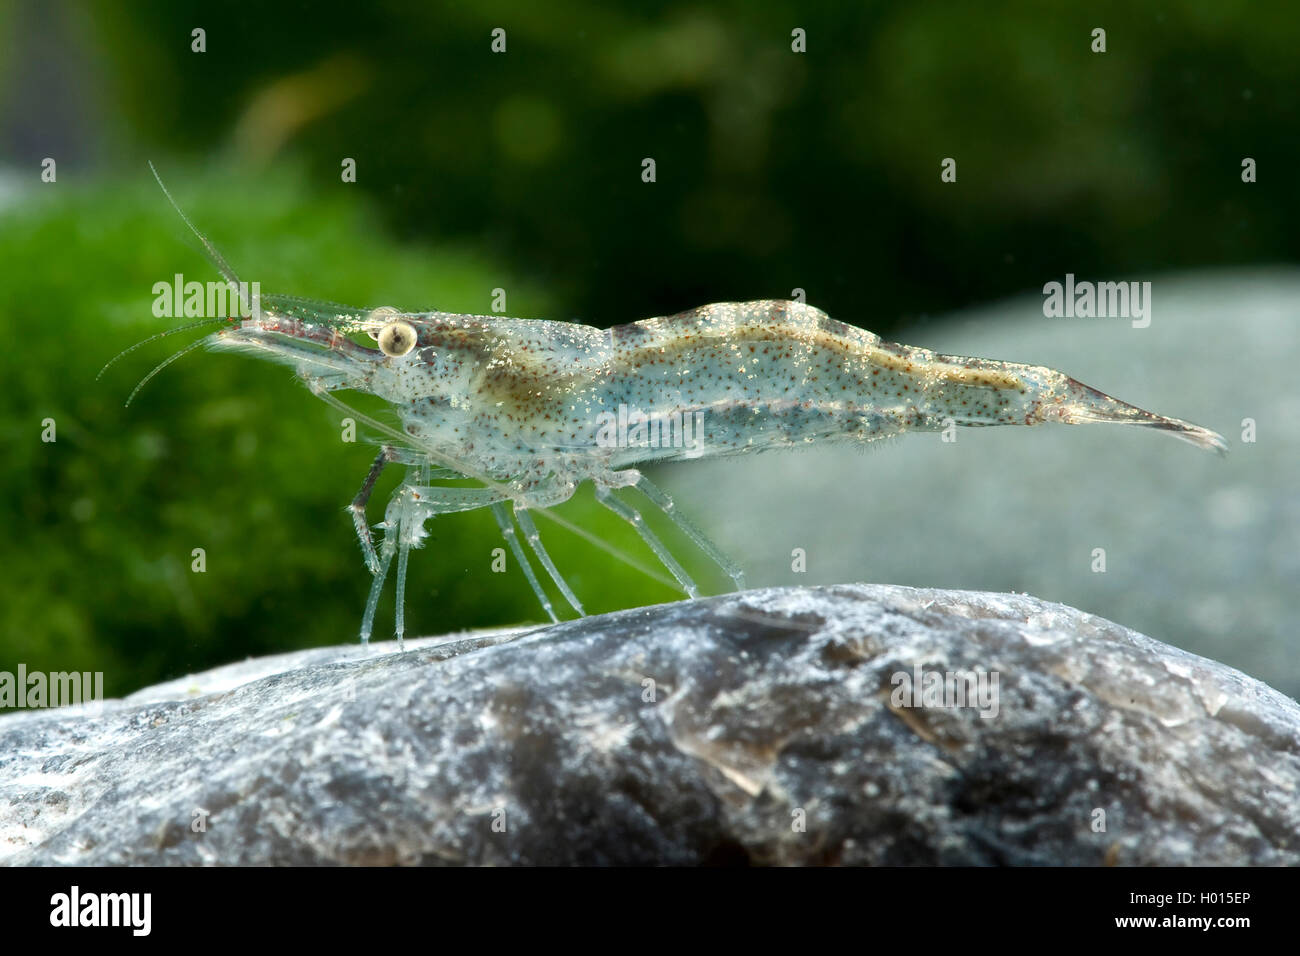 European Freshwater Shrimp (Atyaephyra desmaresti), on a stone Stock Photo